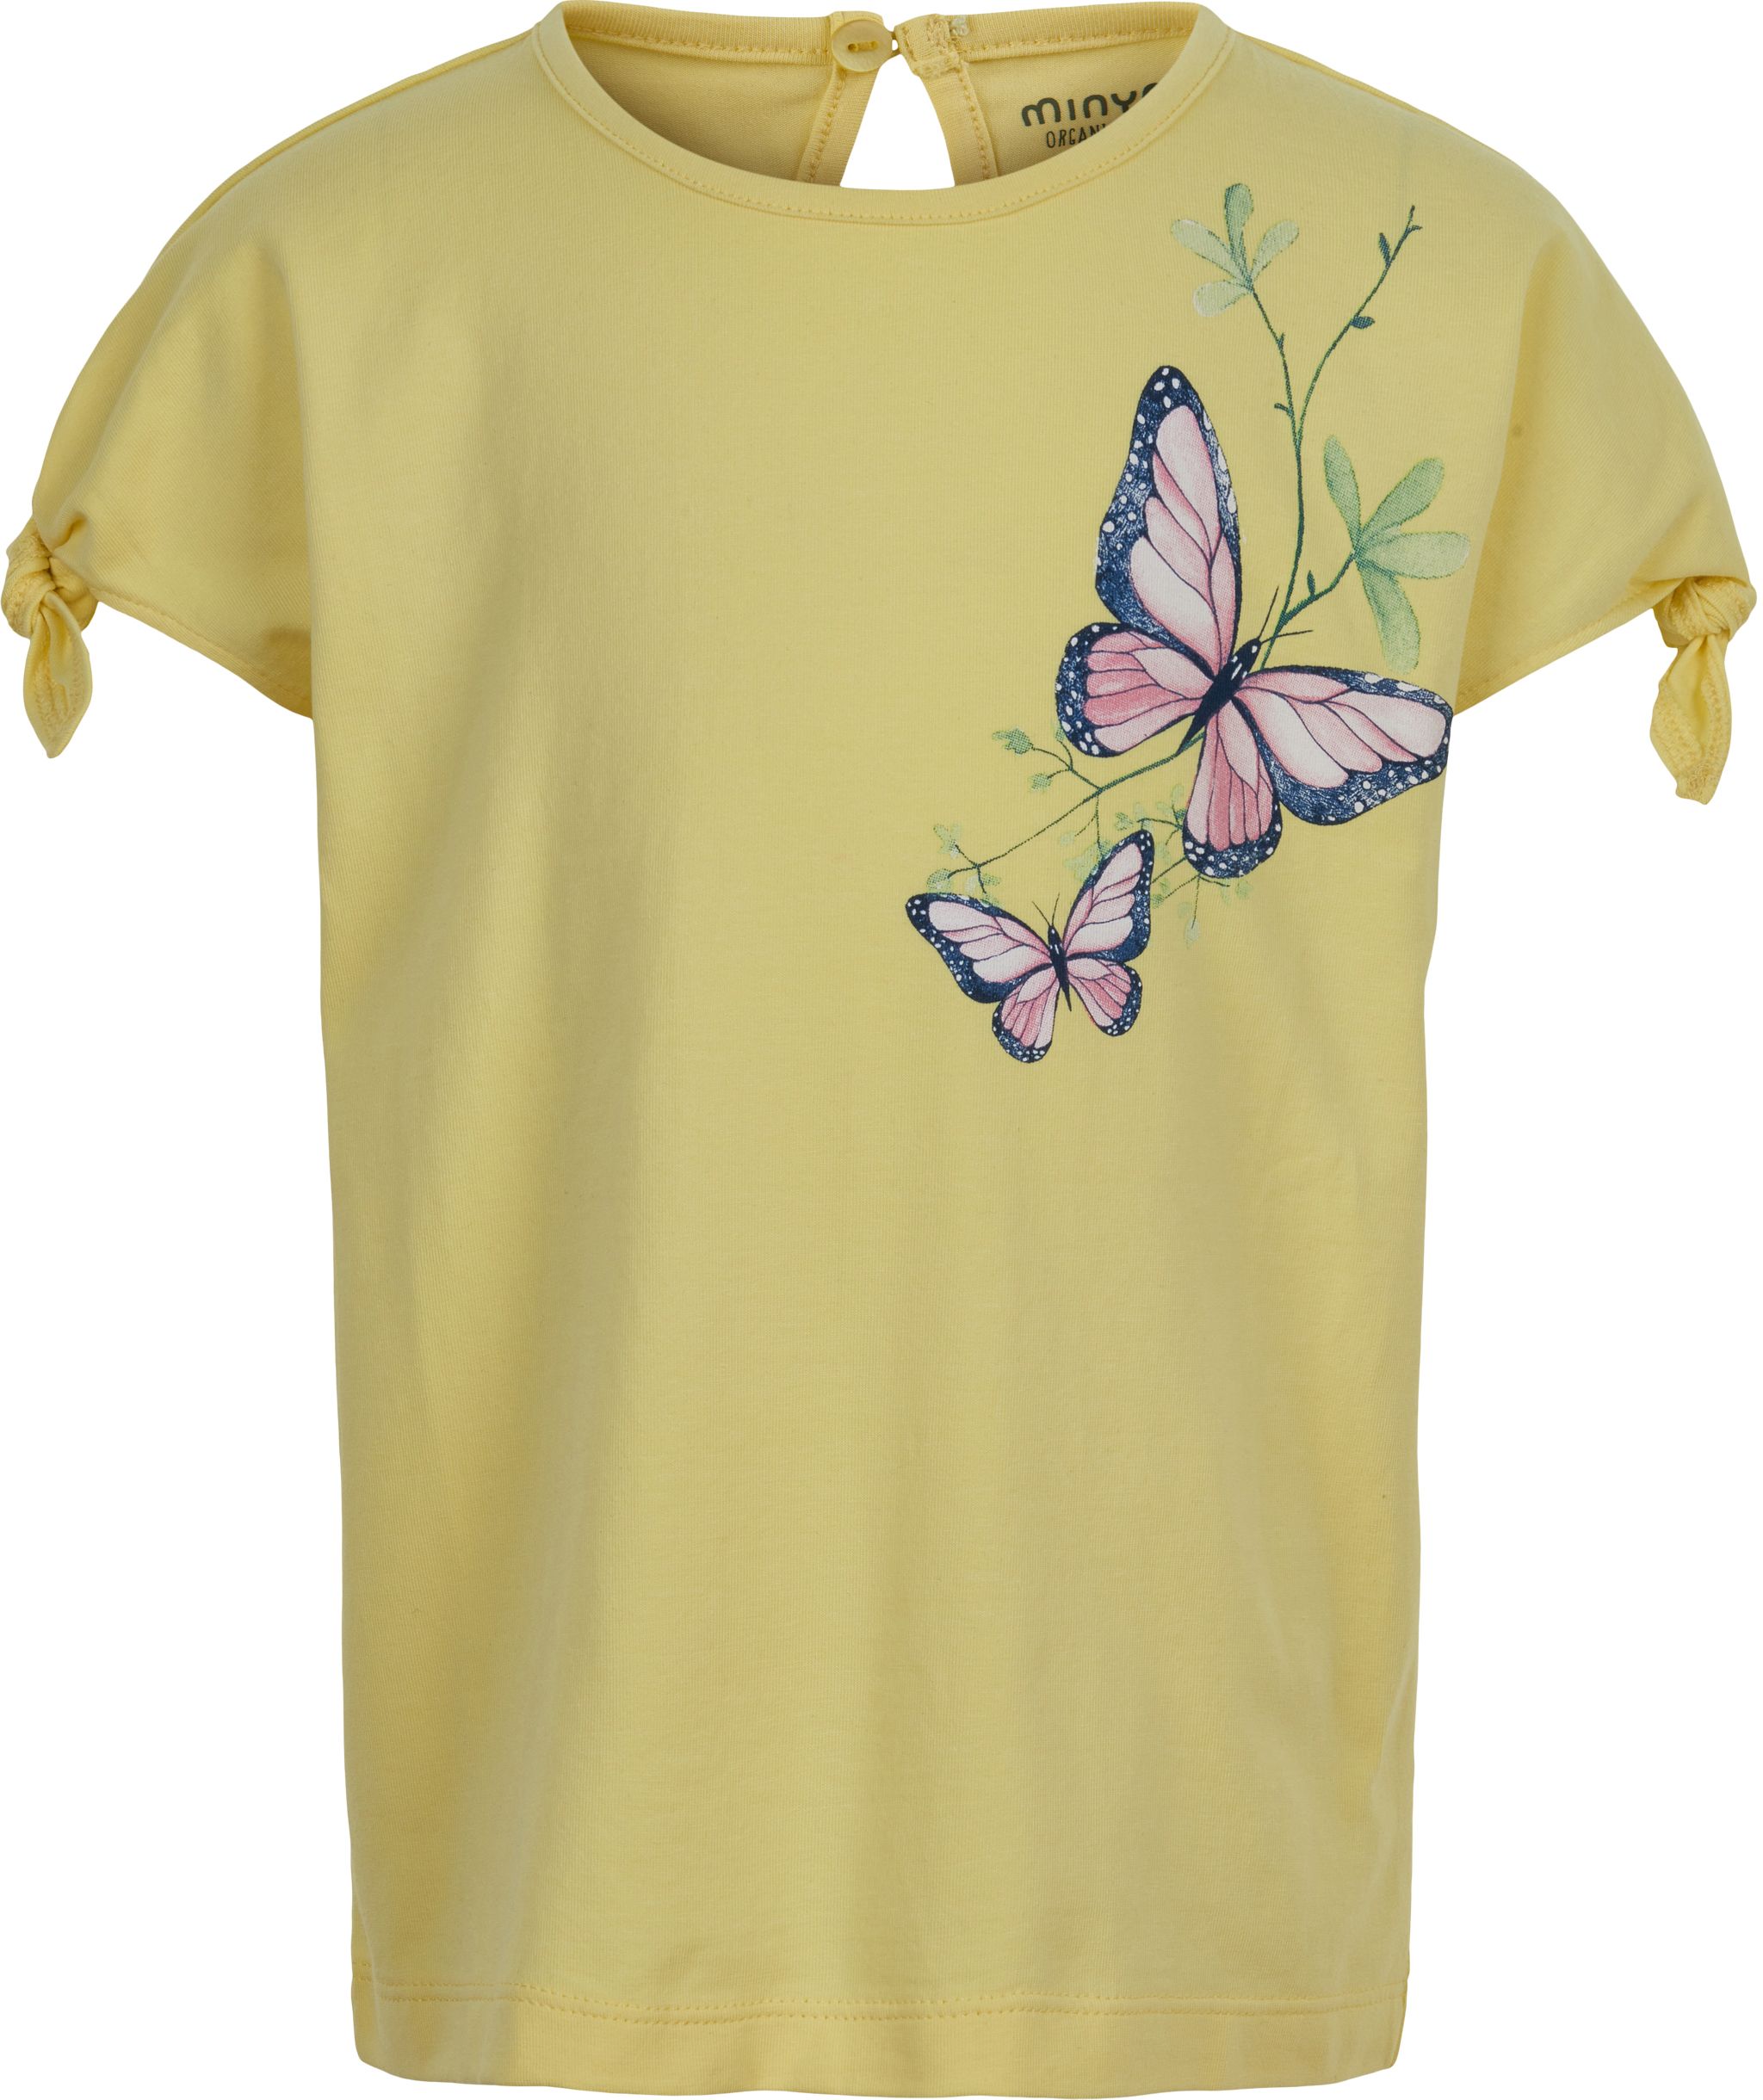 Minymo Girl T-Shirt s/s Schmetterling gelb